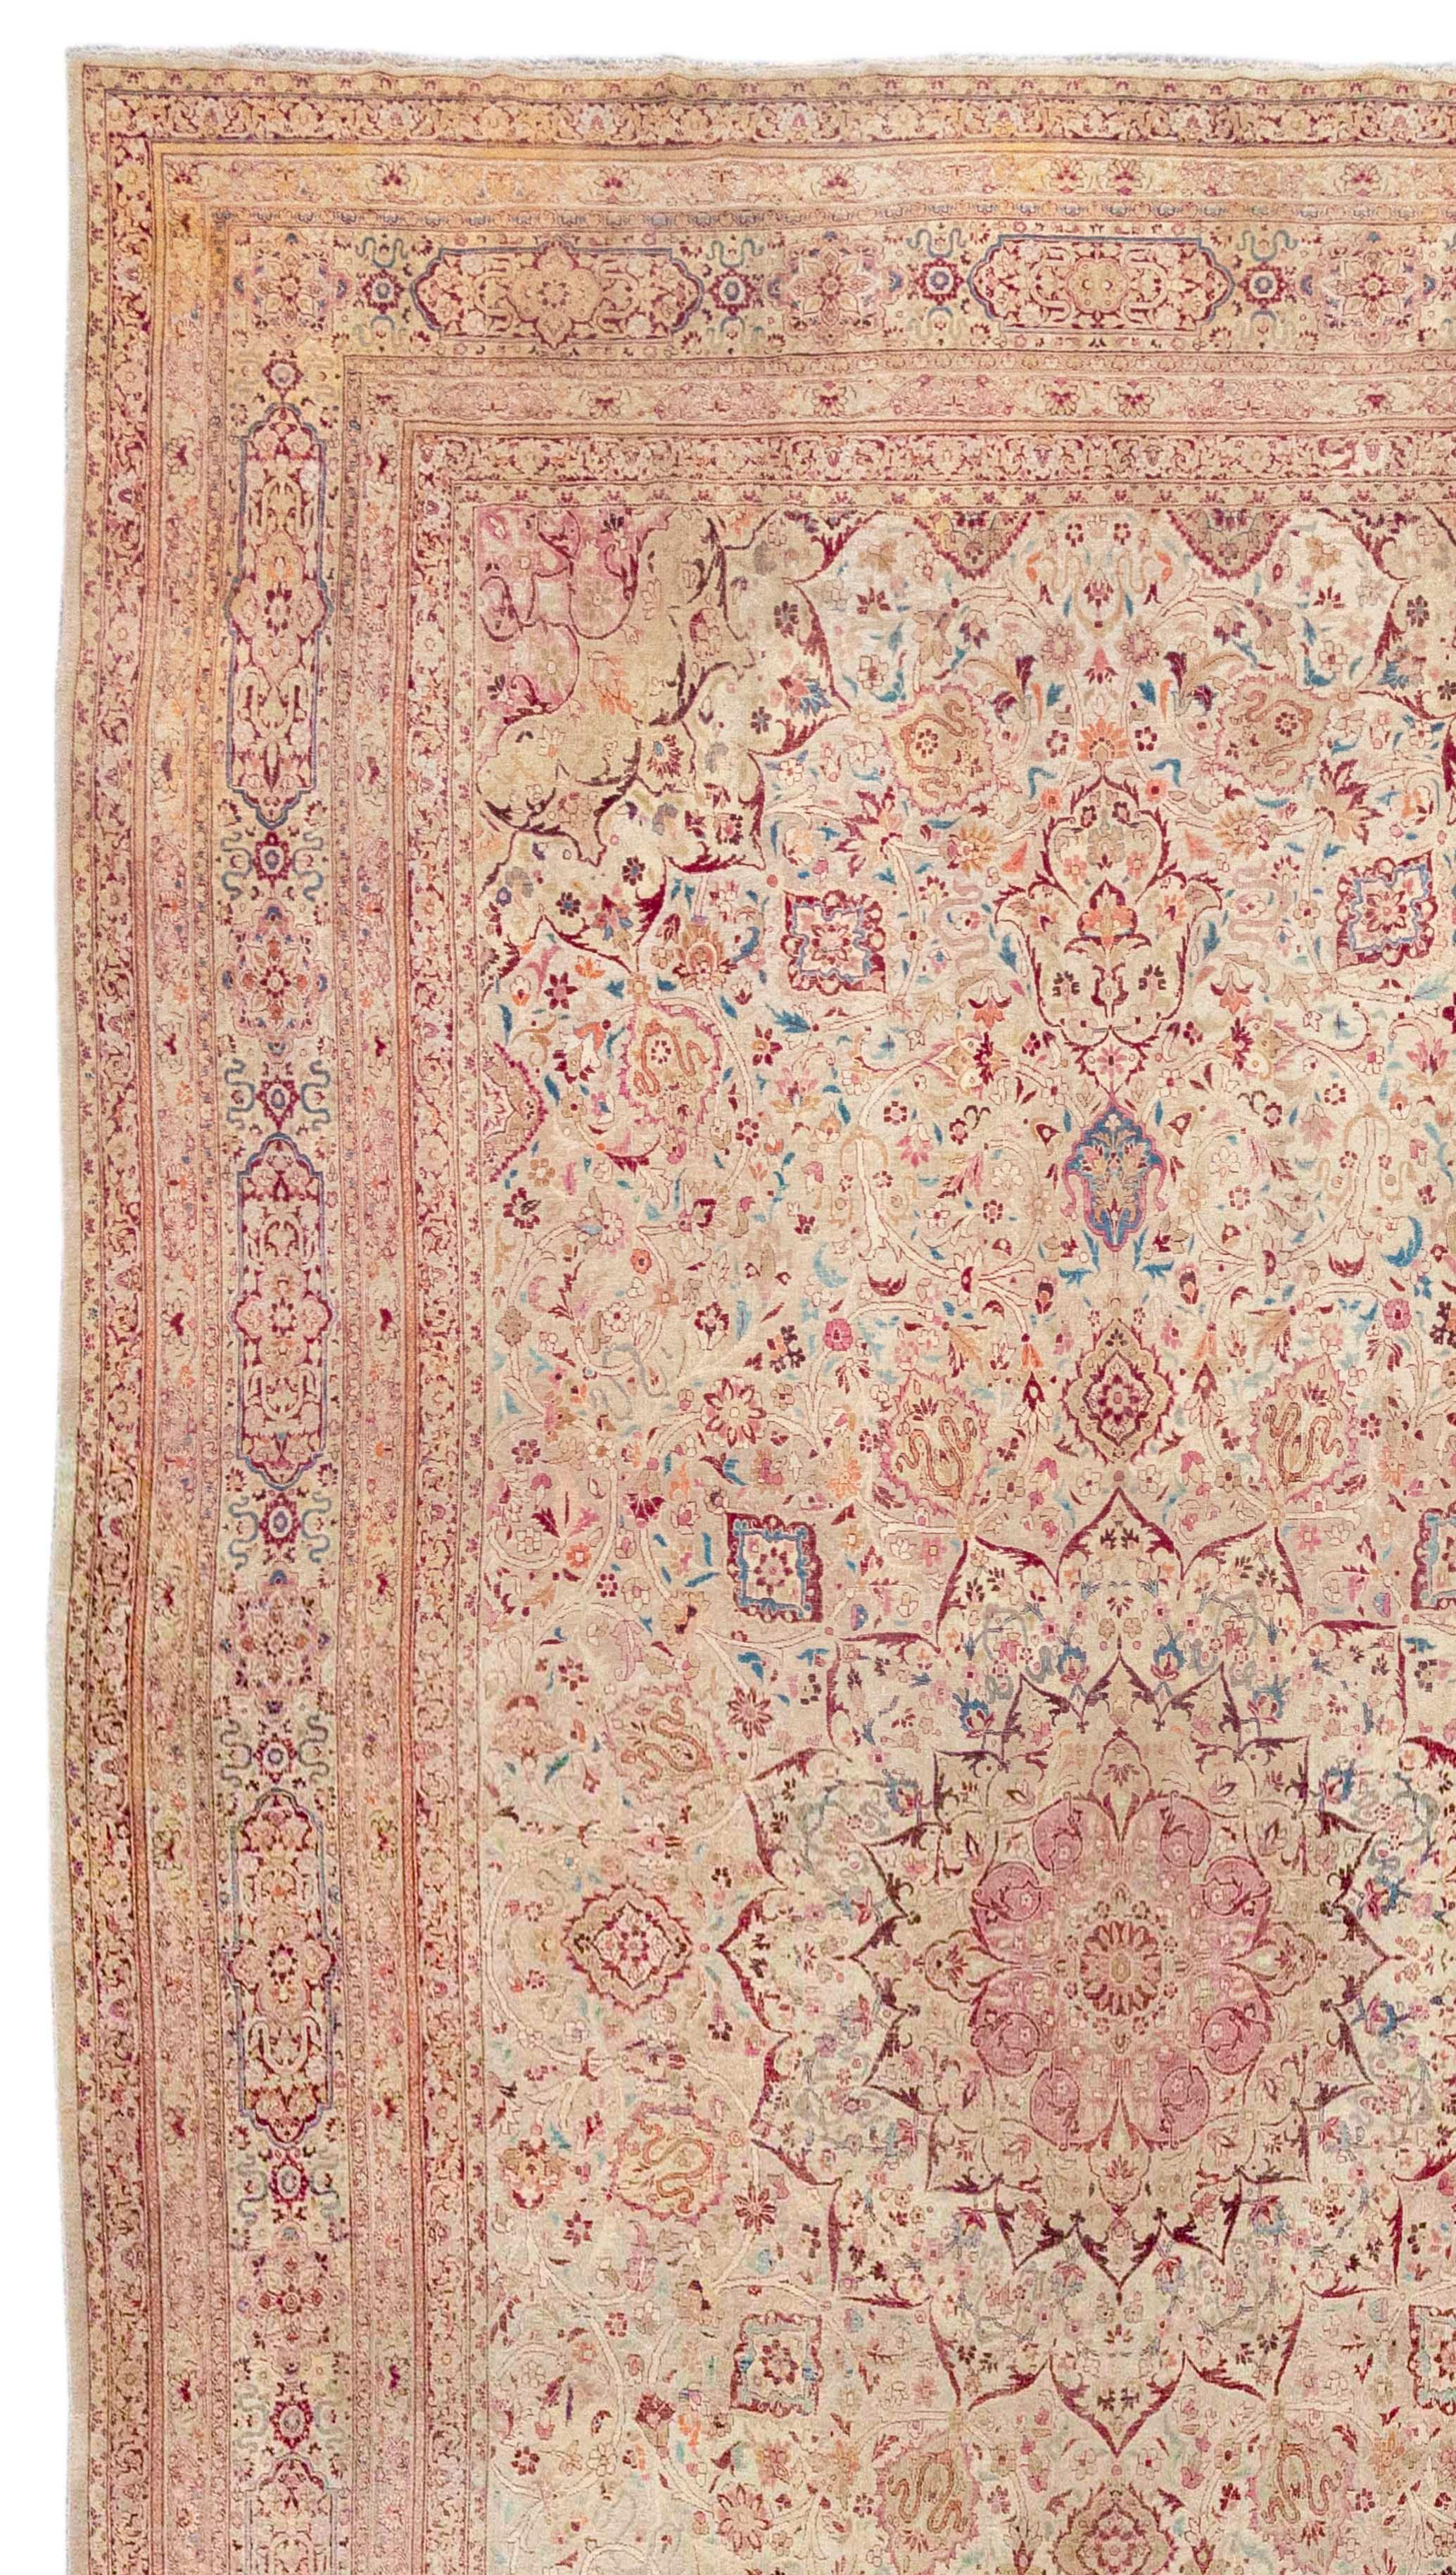 Indian Agra carpet. Measures: 13' 9